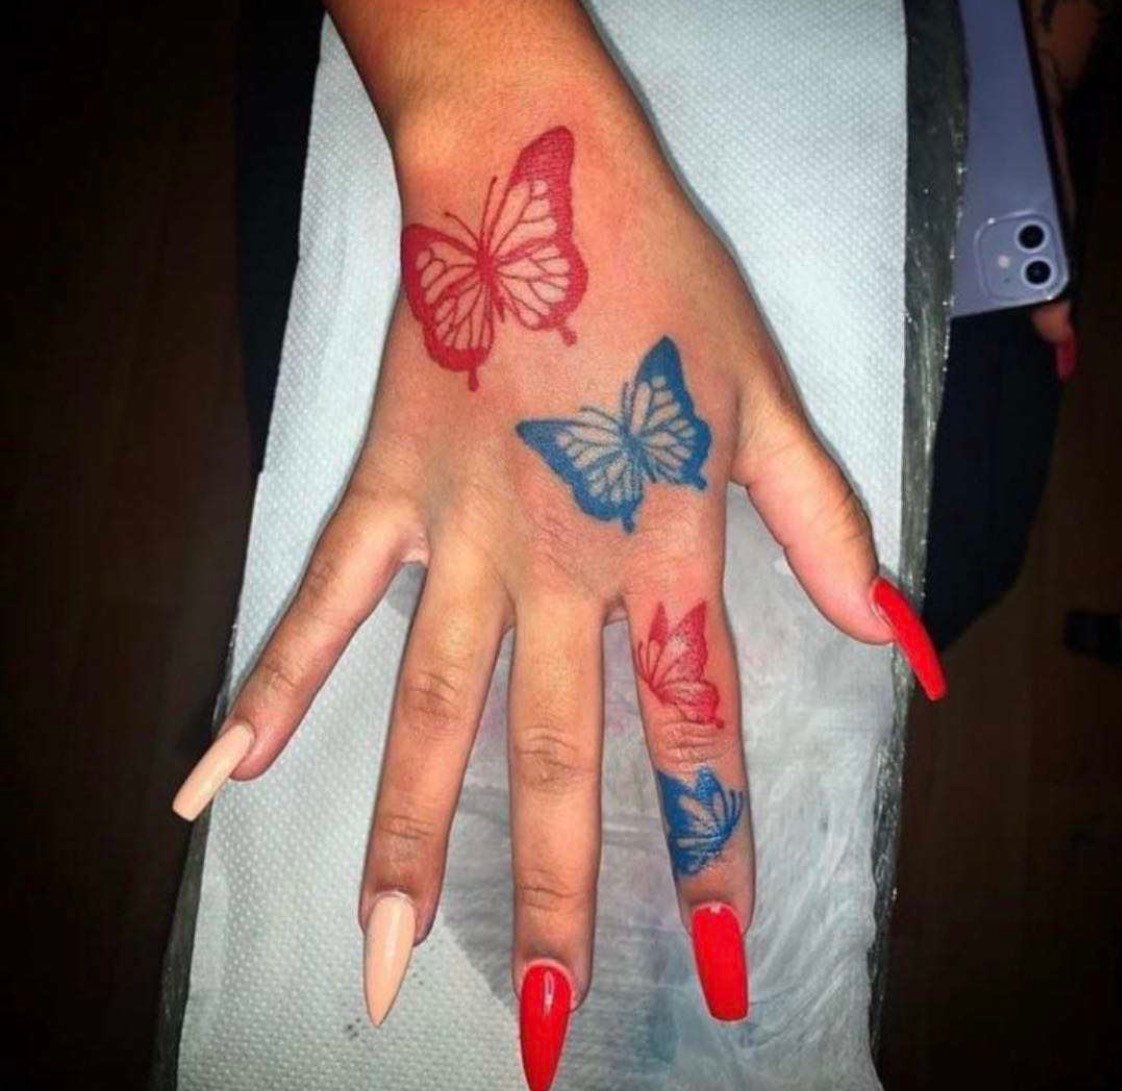 8 Butterfly Tattoo, Fake Butterfly Tattoo, Transfer Temporary Tattoo,  Butterfly, Butterflies/ Temporary Tattoo Women 